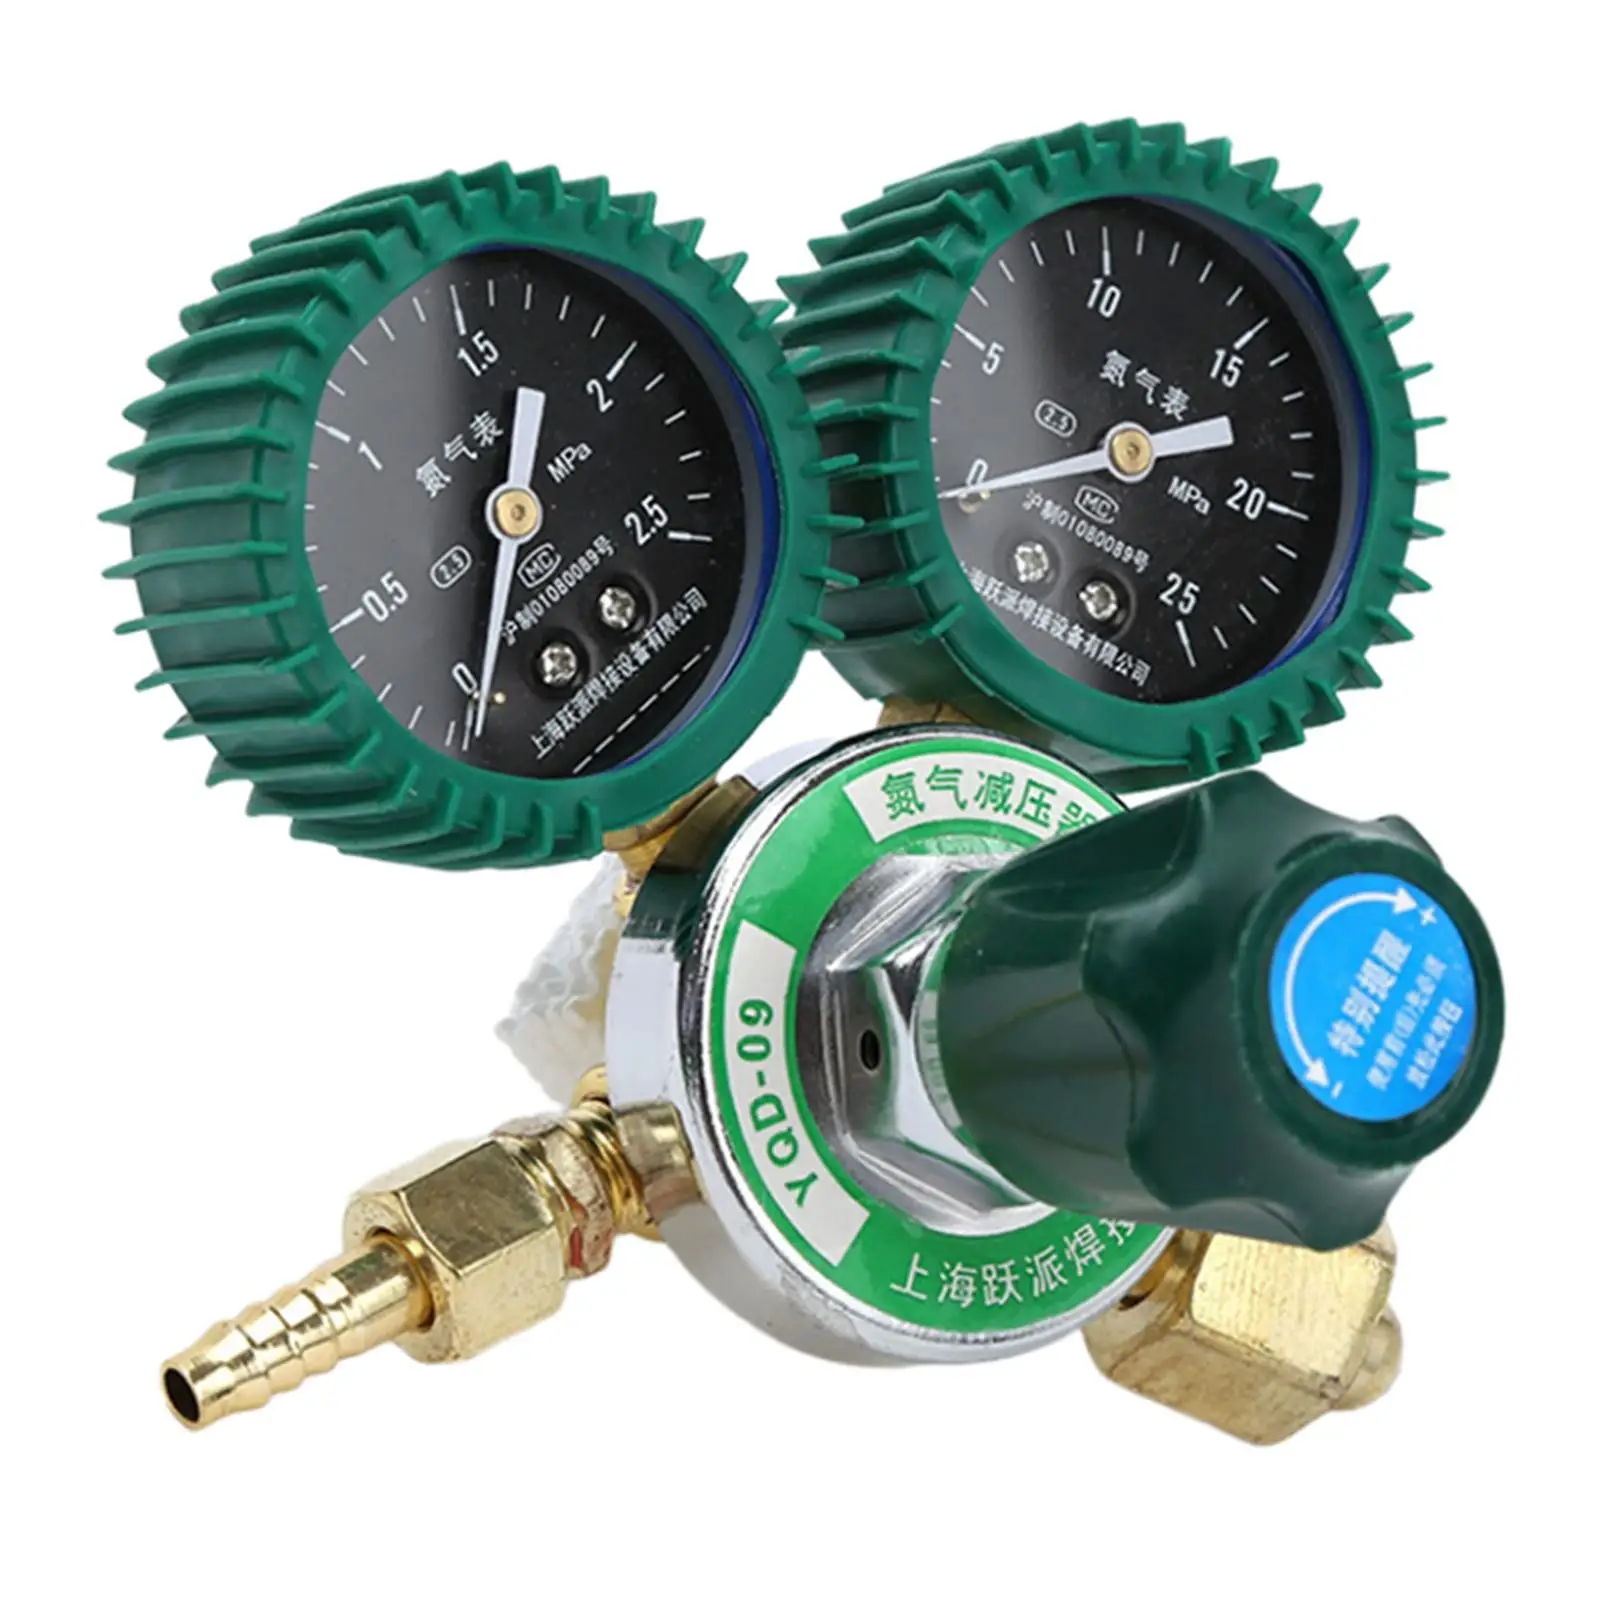  Pressure Reducing Valve Meter  Reducer Meter Brass Pneumatic Valve Control for Welders